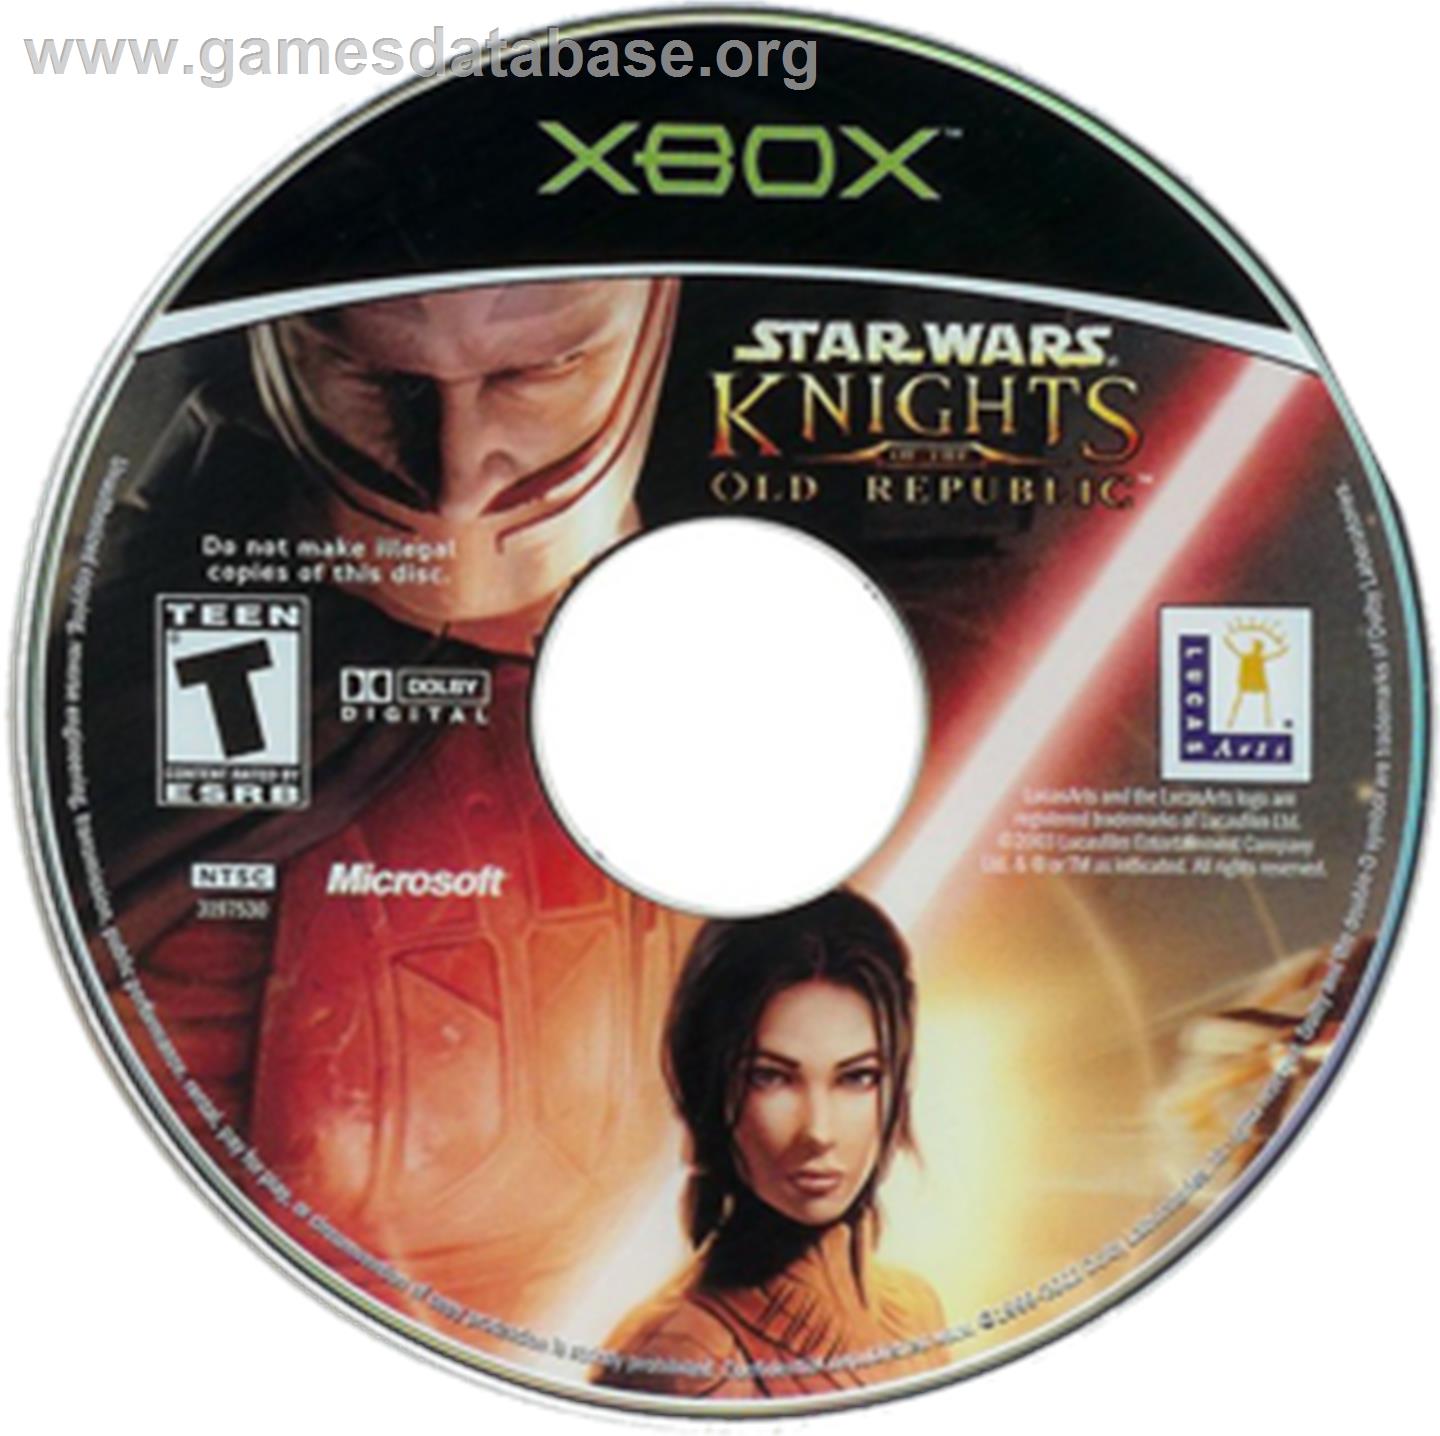 Star Wars: Knights of the Old Republic - Microsoft Xbox - Artwork - CD